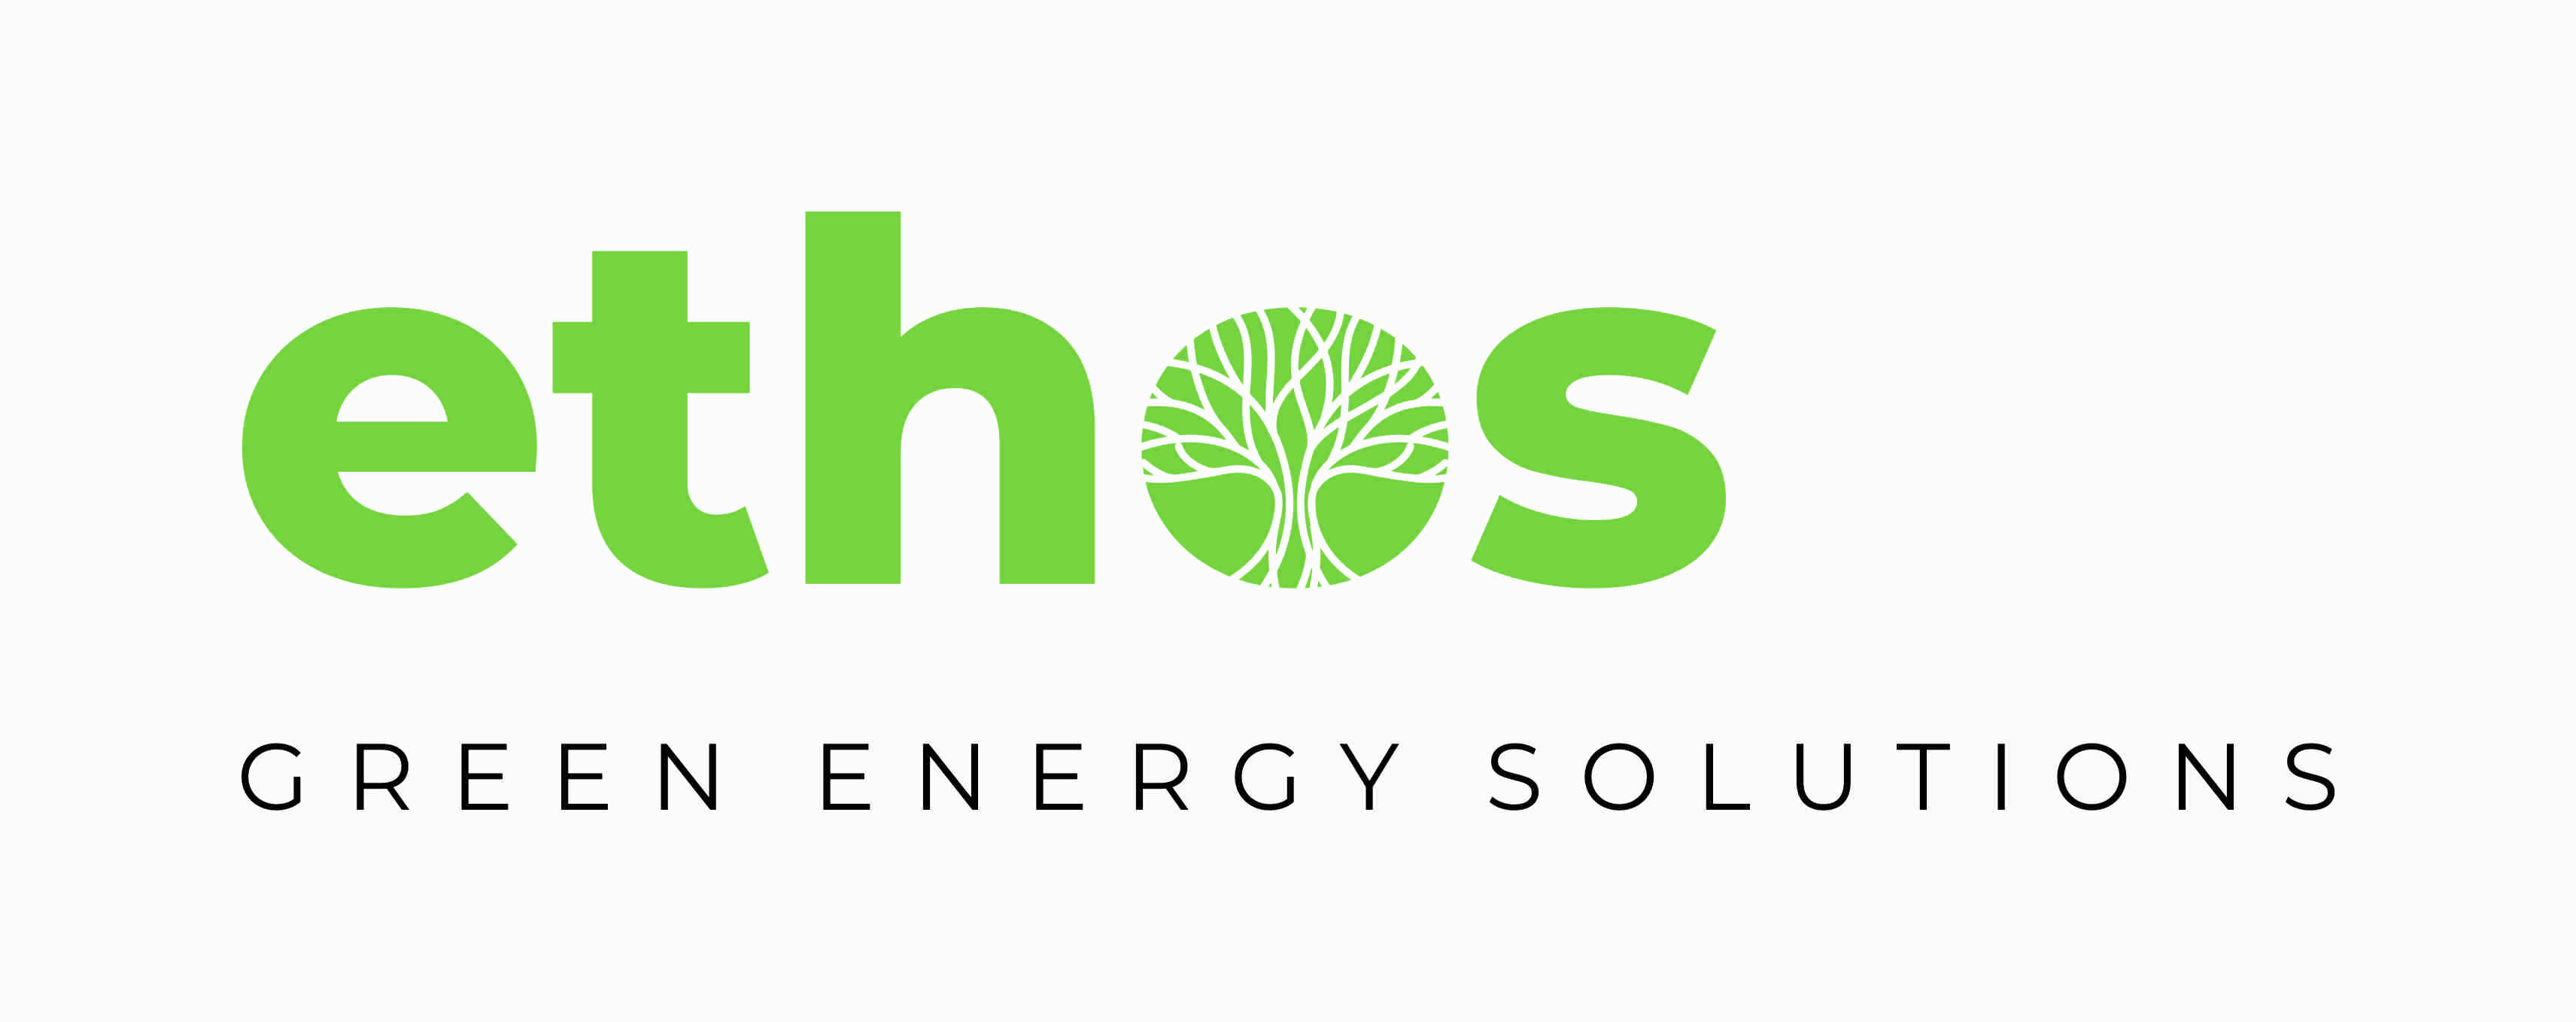 Organisation Logo - ETHOS GREEN ENERGY SOLUTIONS LIMITED